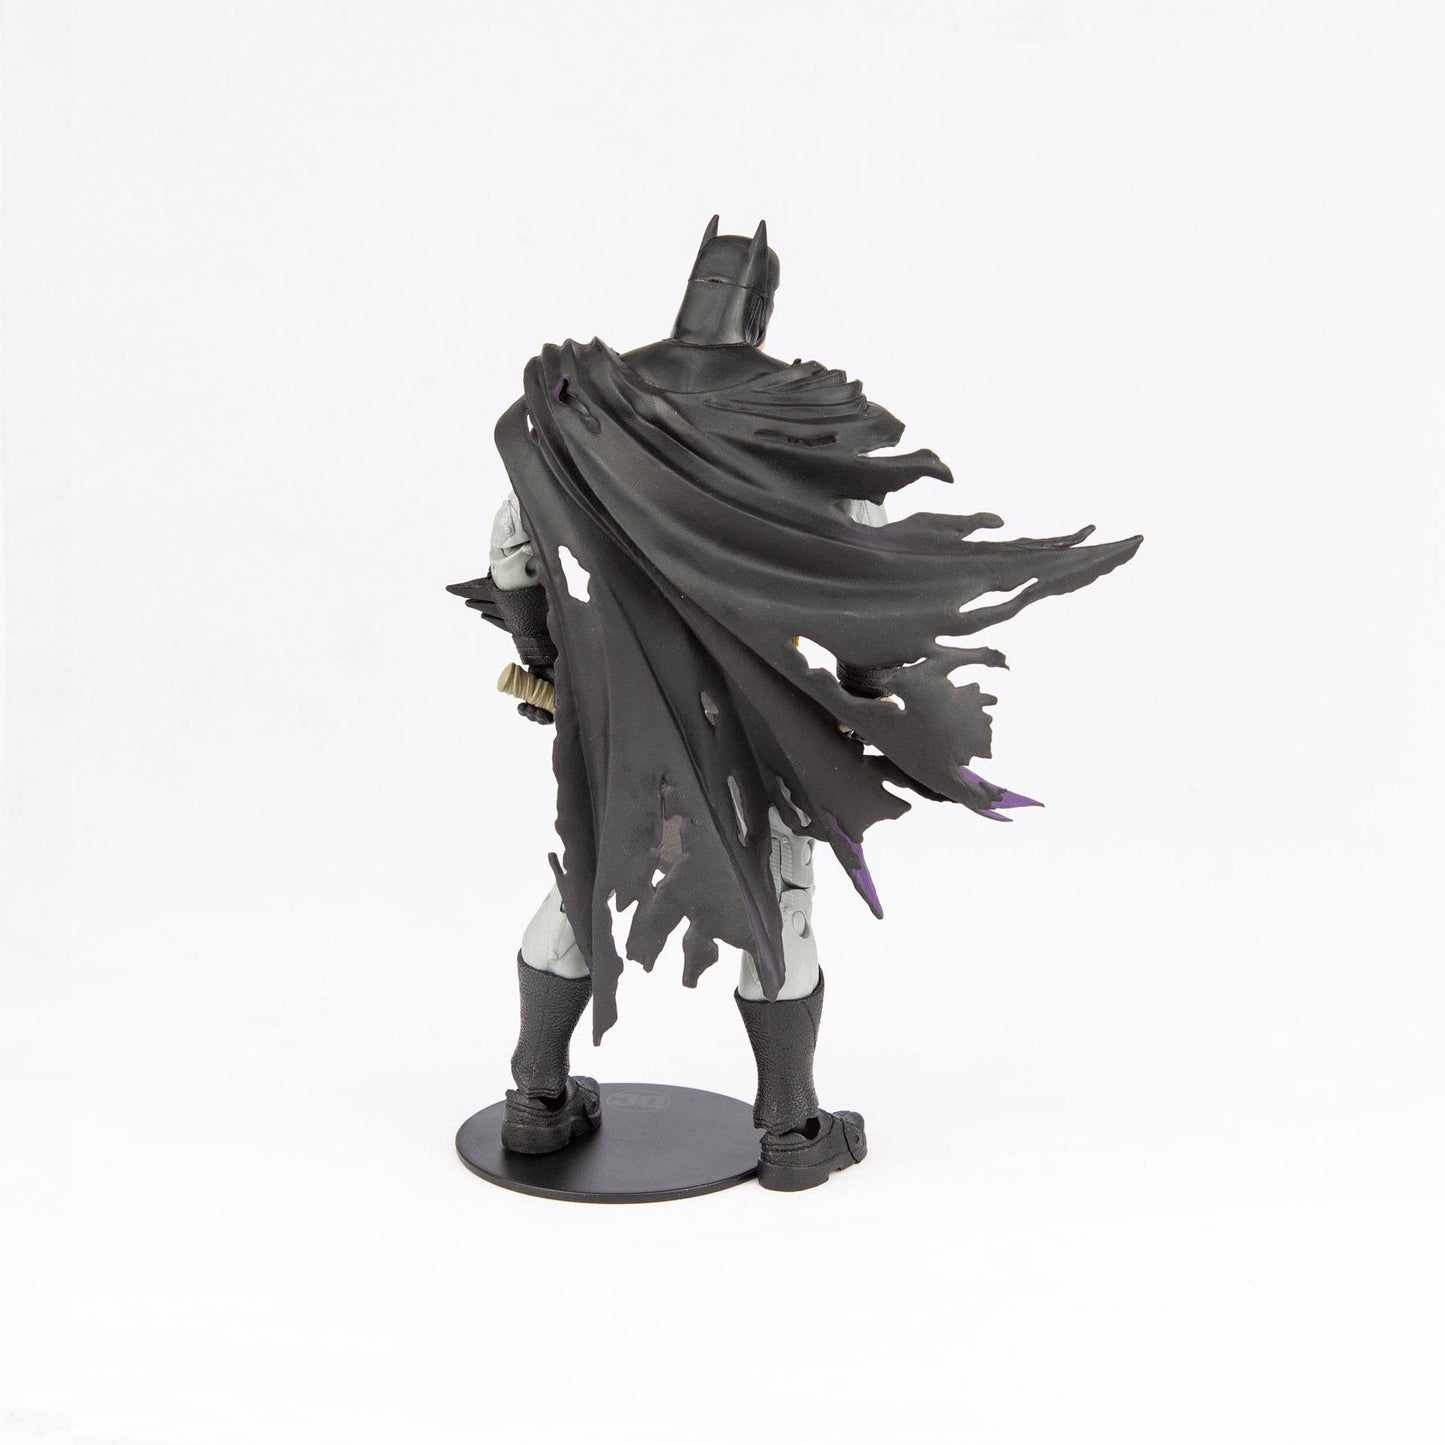 Batman with Battle Damage - Articulated figurine